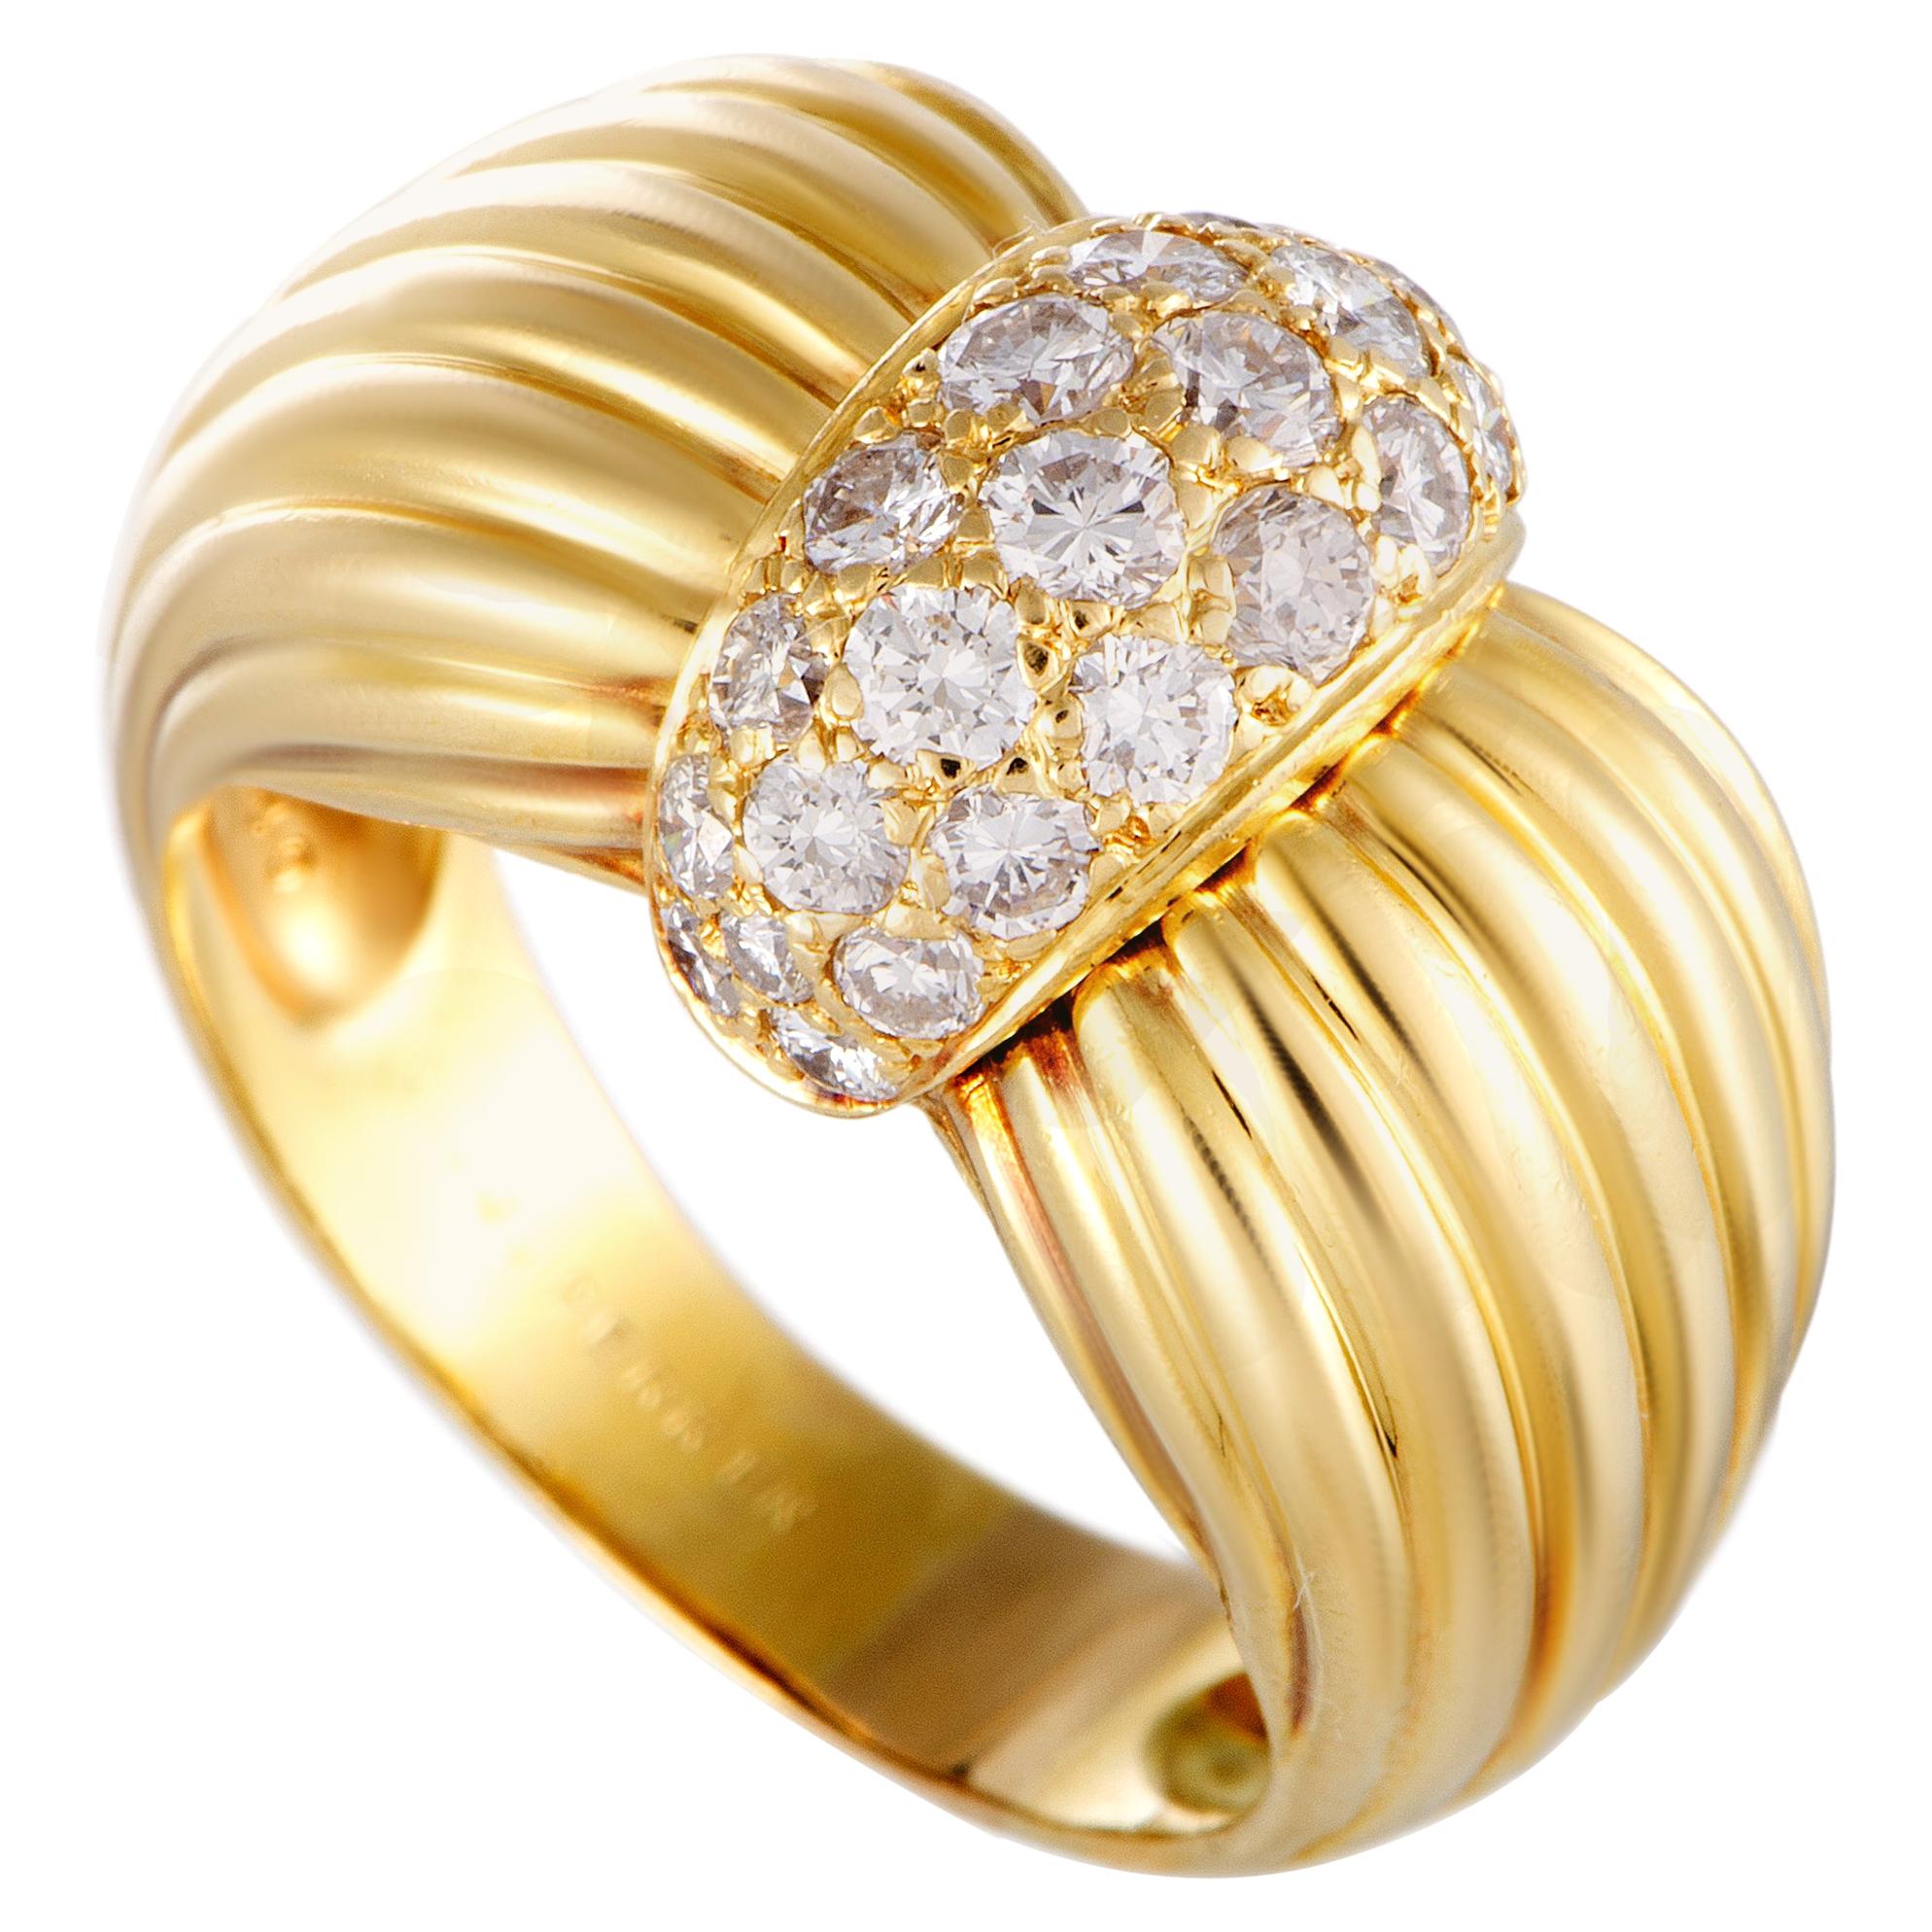 O.J.Perrin 18 Karat Yellow Gold Diamond Pave Band Ring